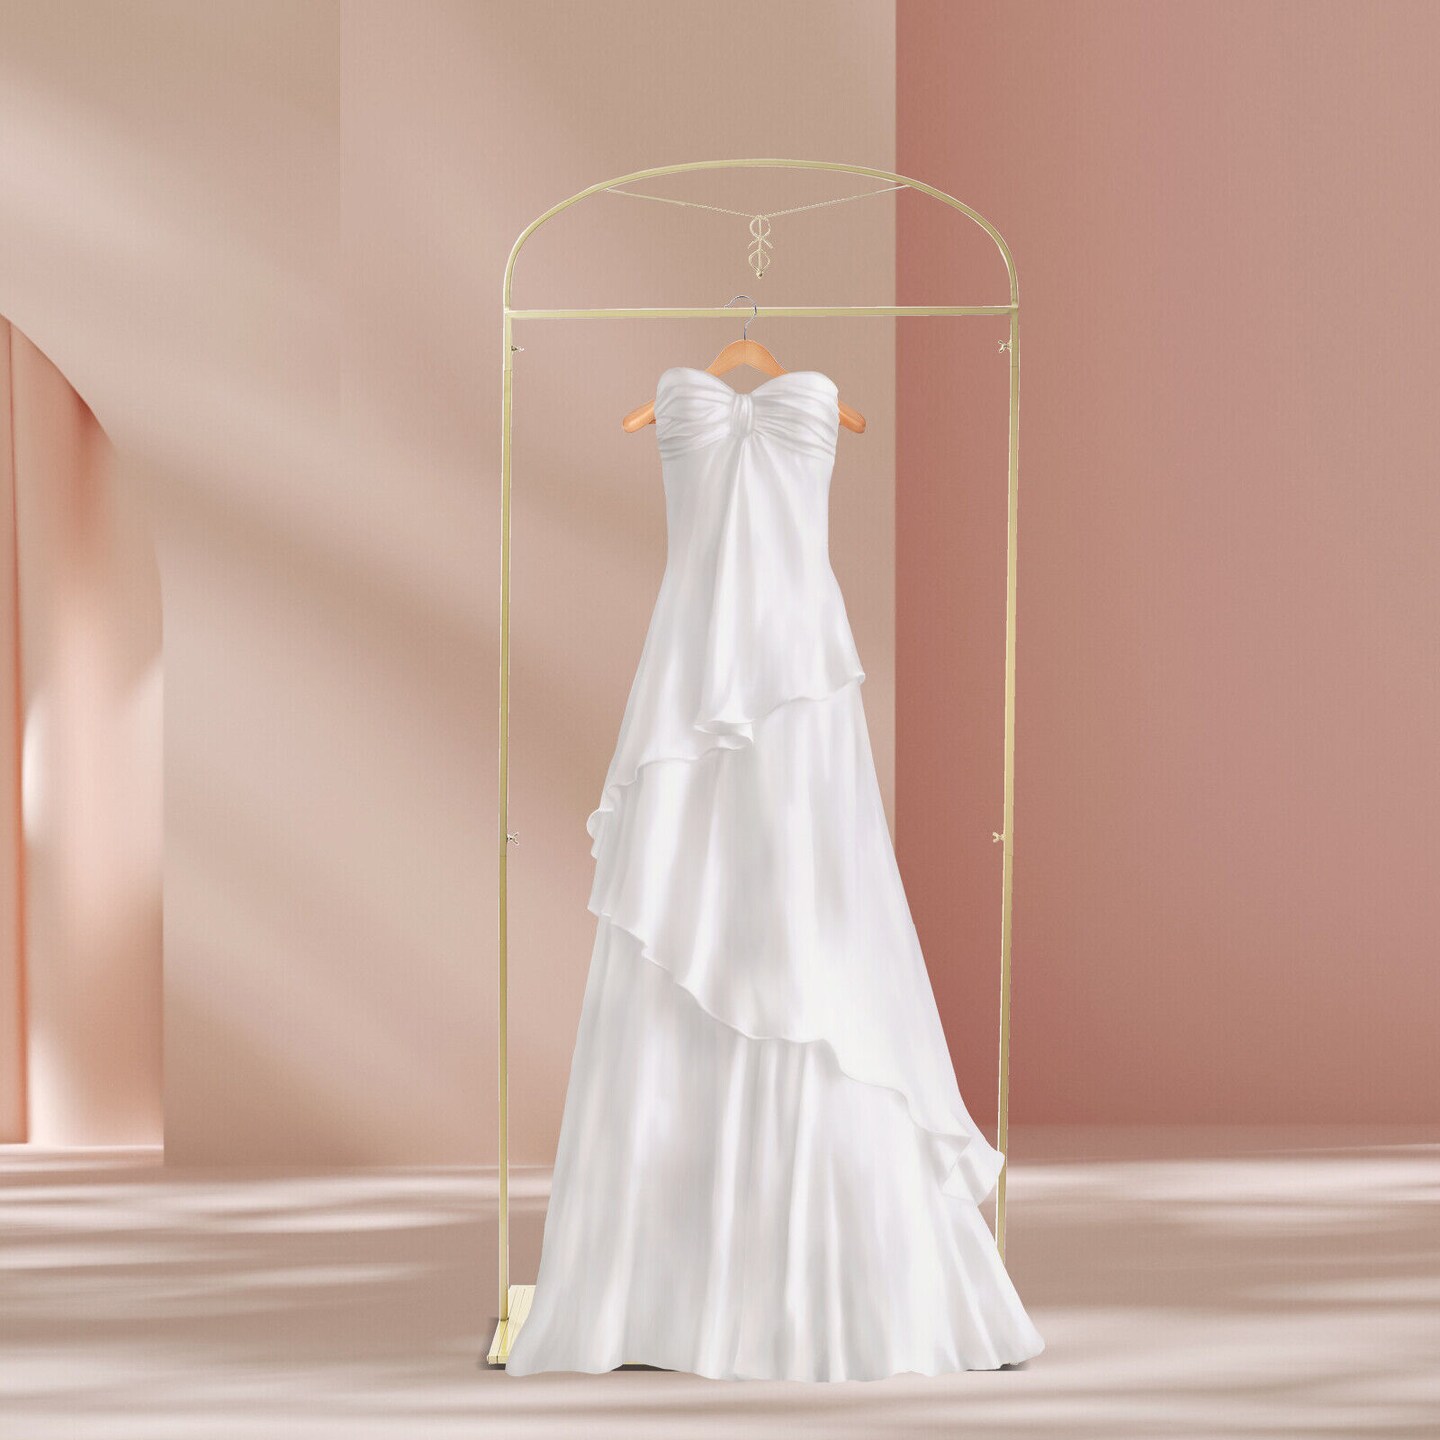 Kitcheniva Gold Garment Rack Wedding Dress Display Stand